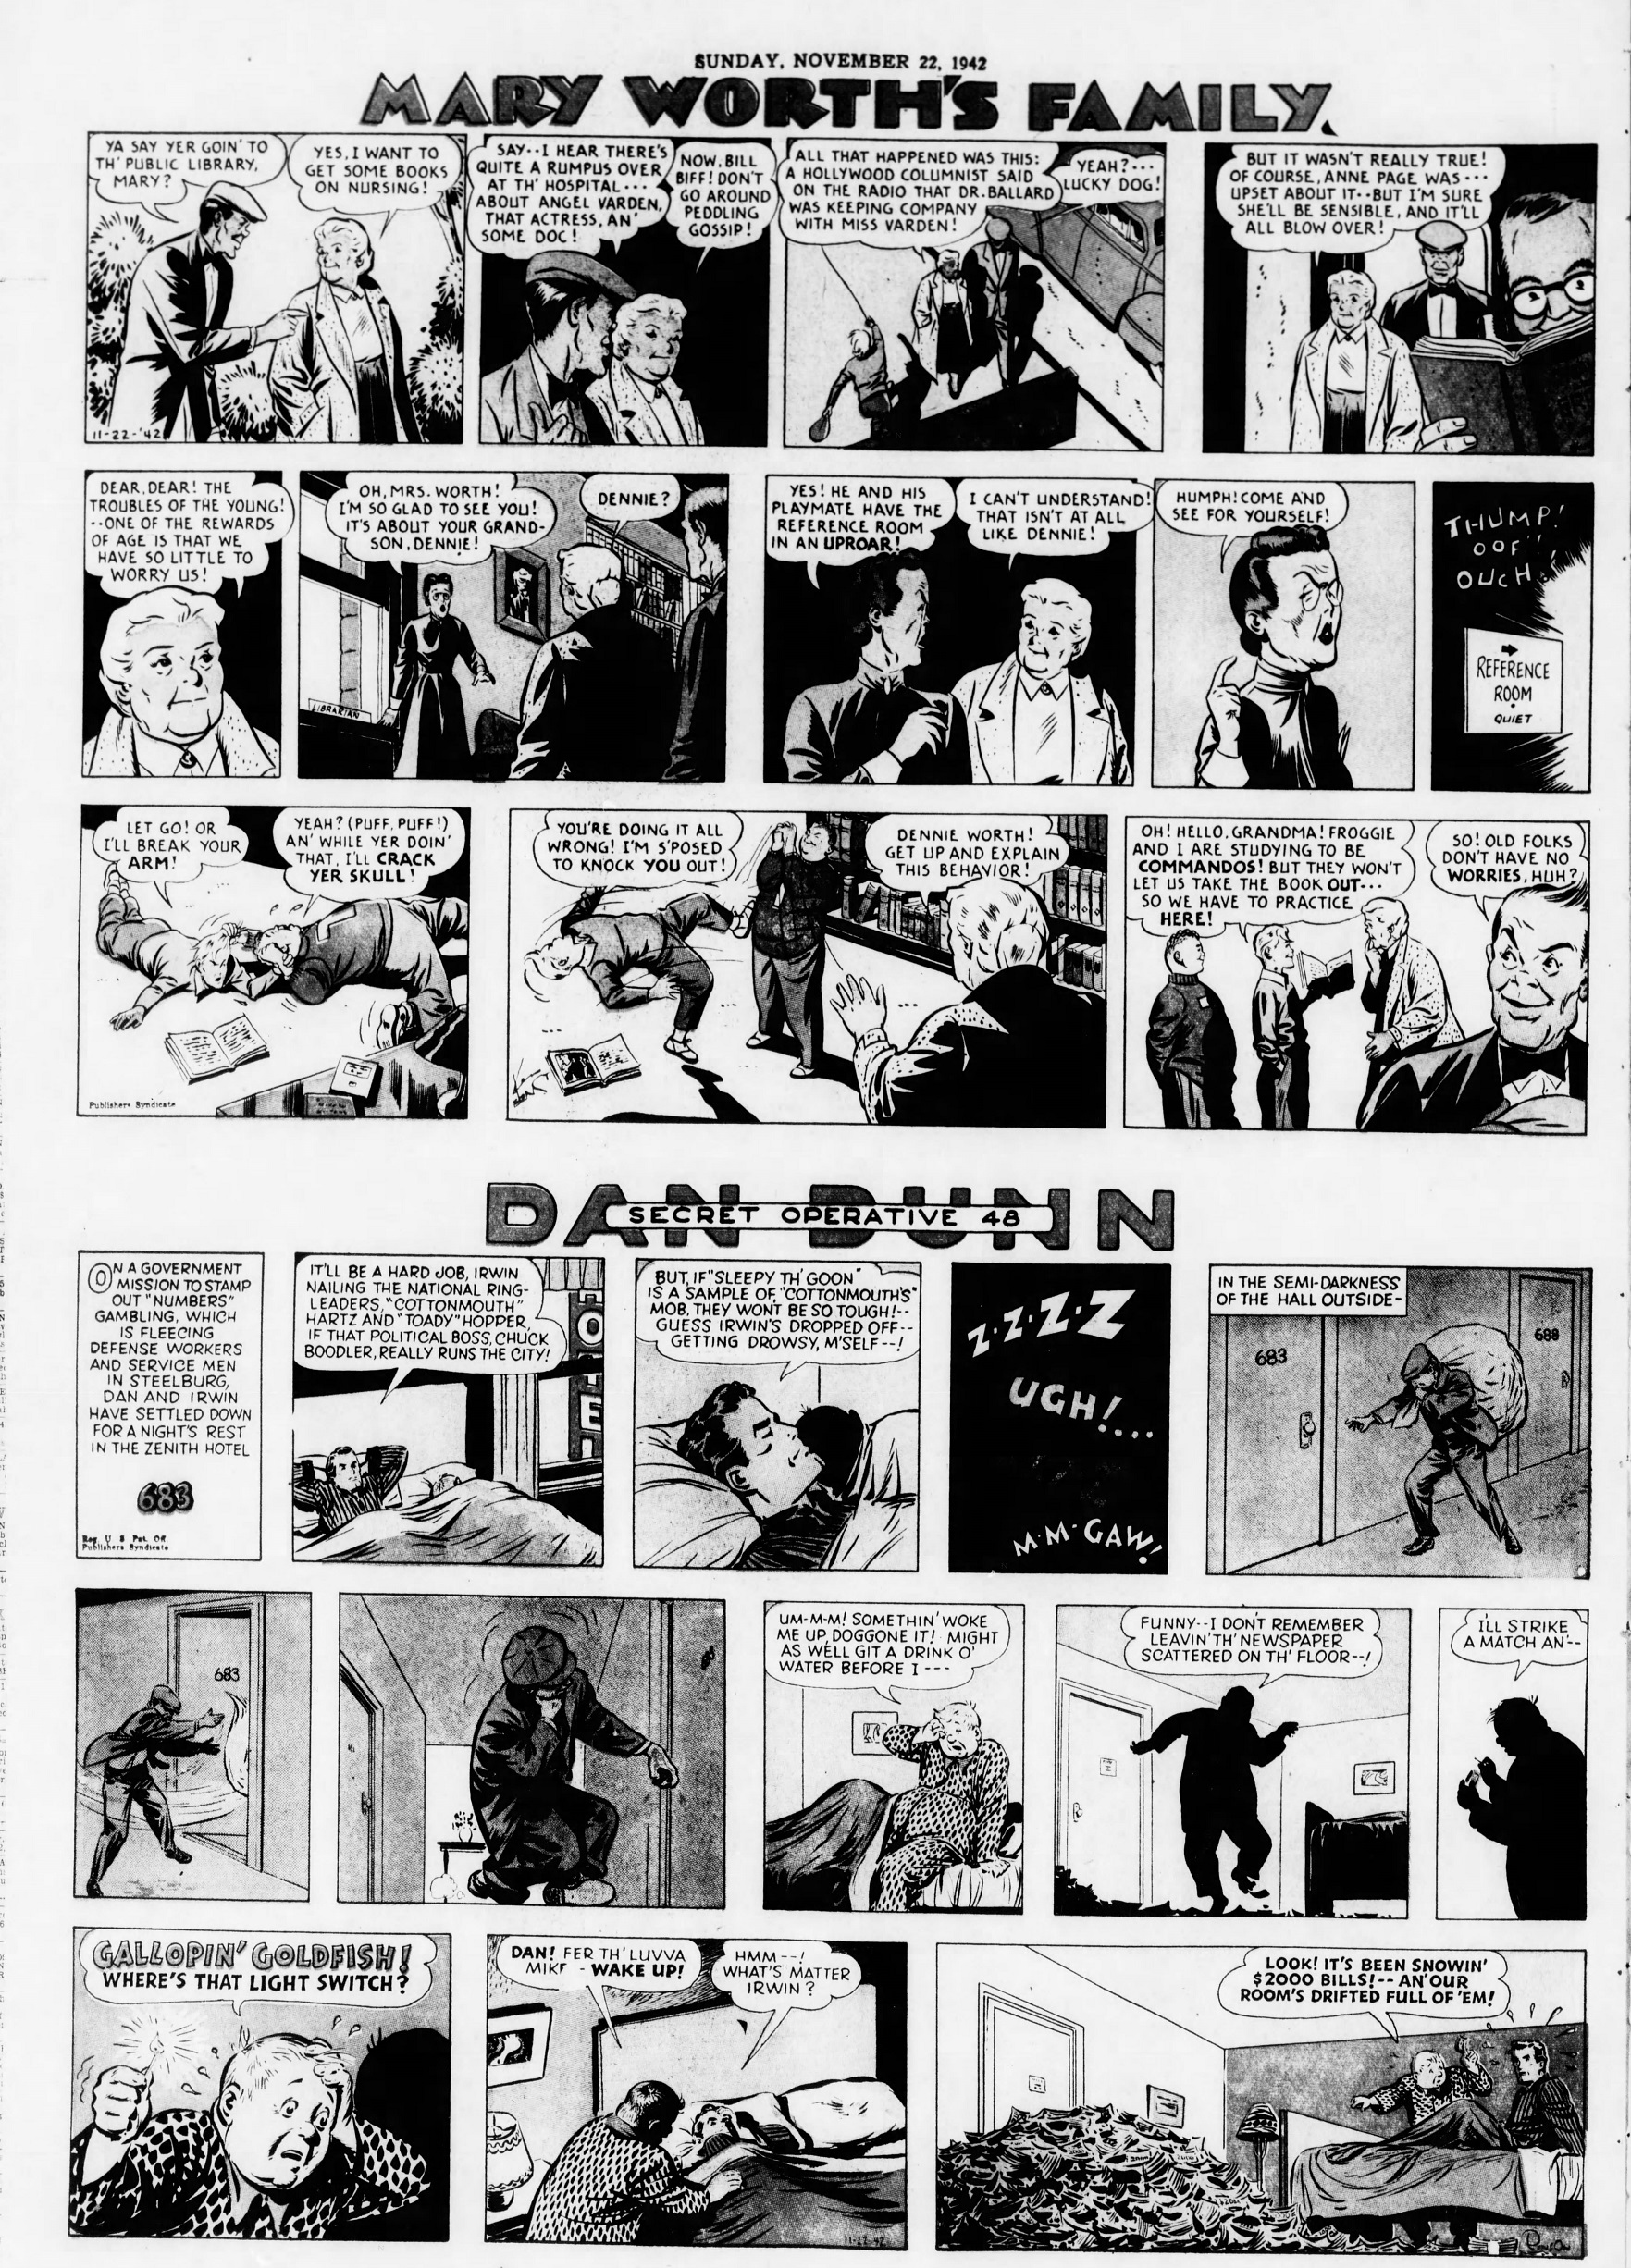 The_Brooklyn_Daily_Eagle_Sun__Nov_22__1942_(8).jpg